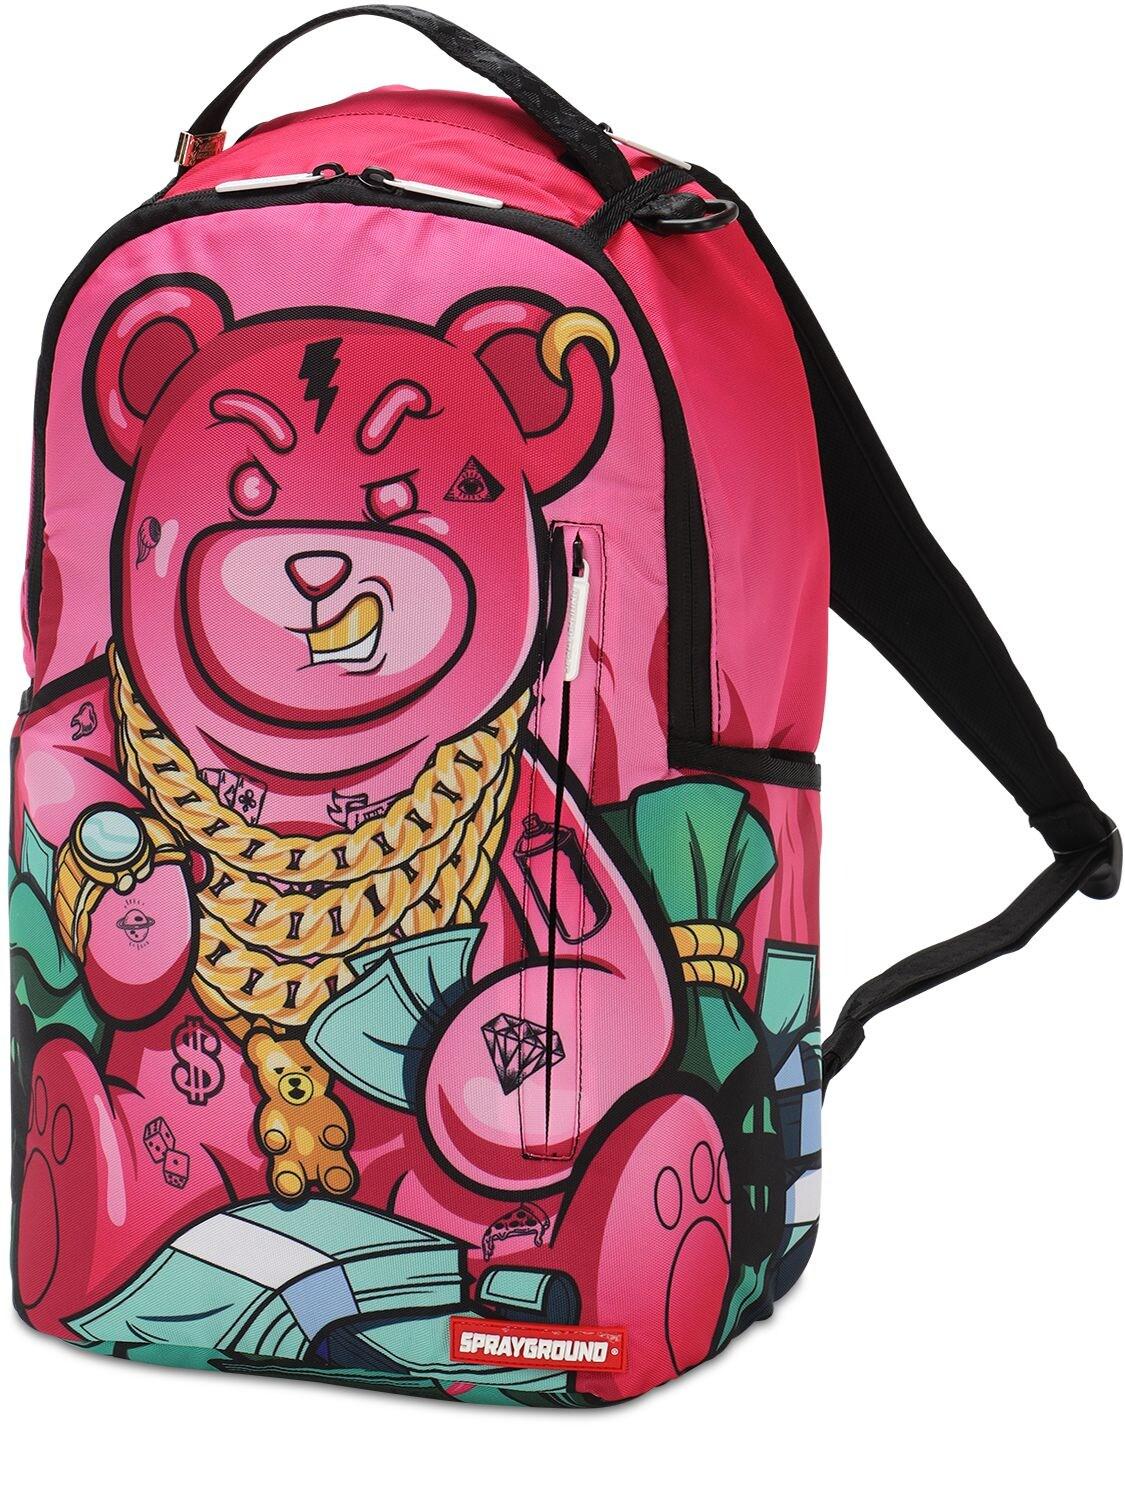 Sprayground Lil Sassy Backpack in Pink for Men - Lyst